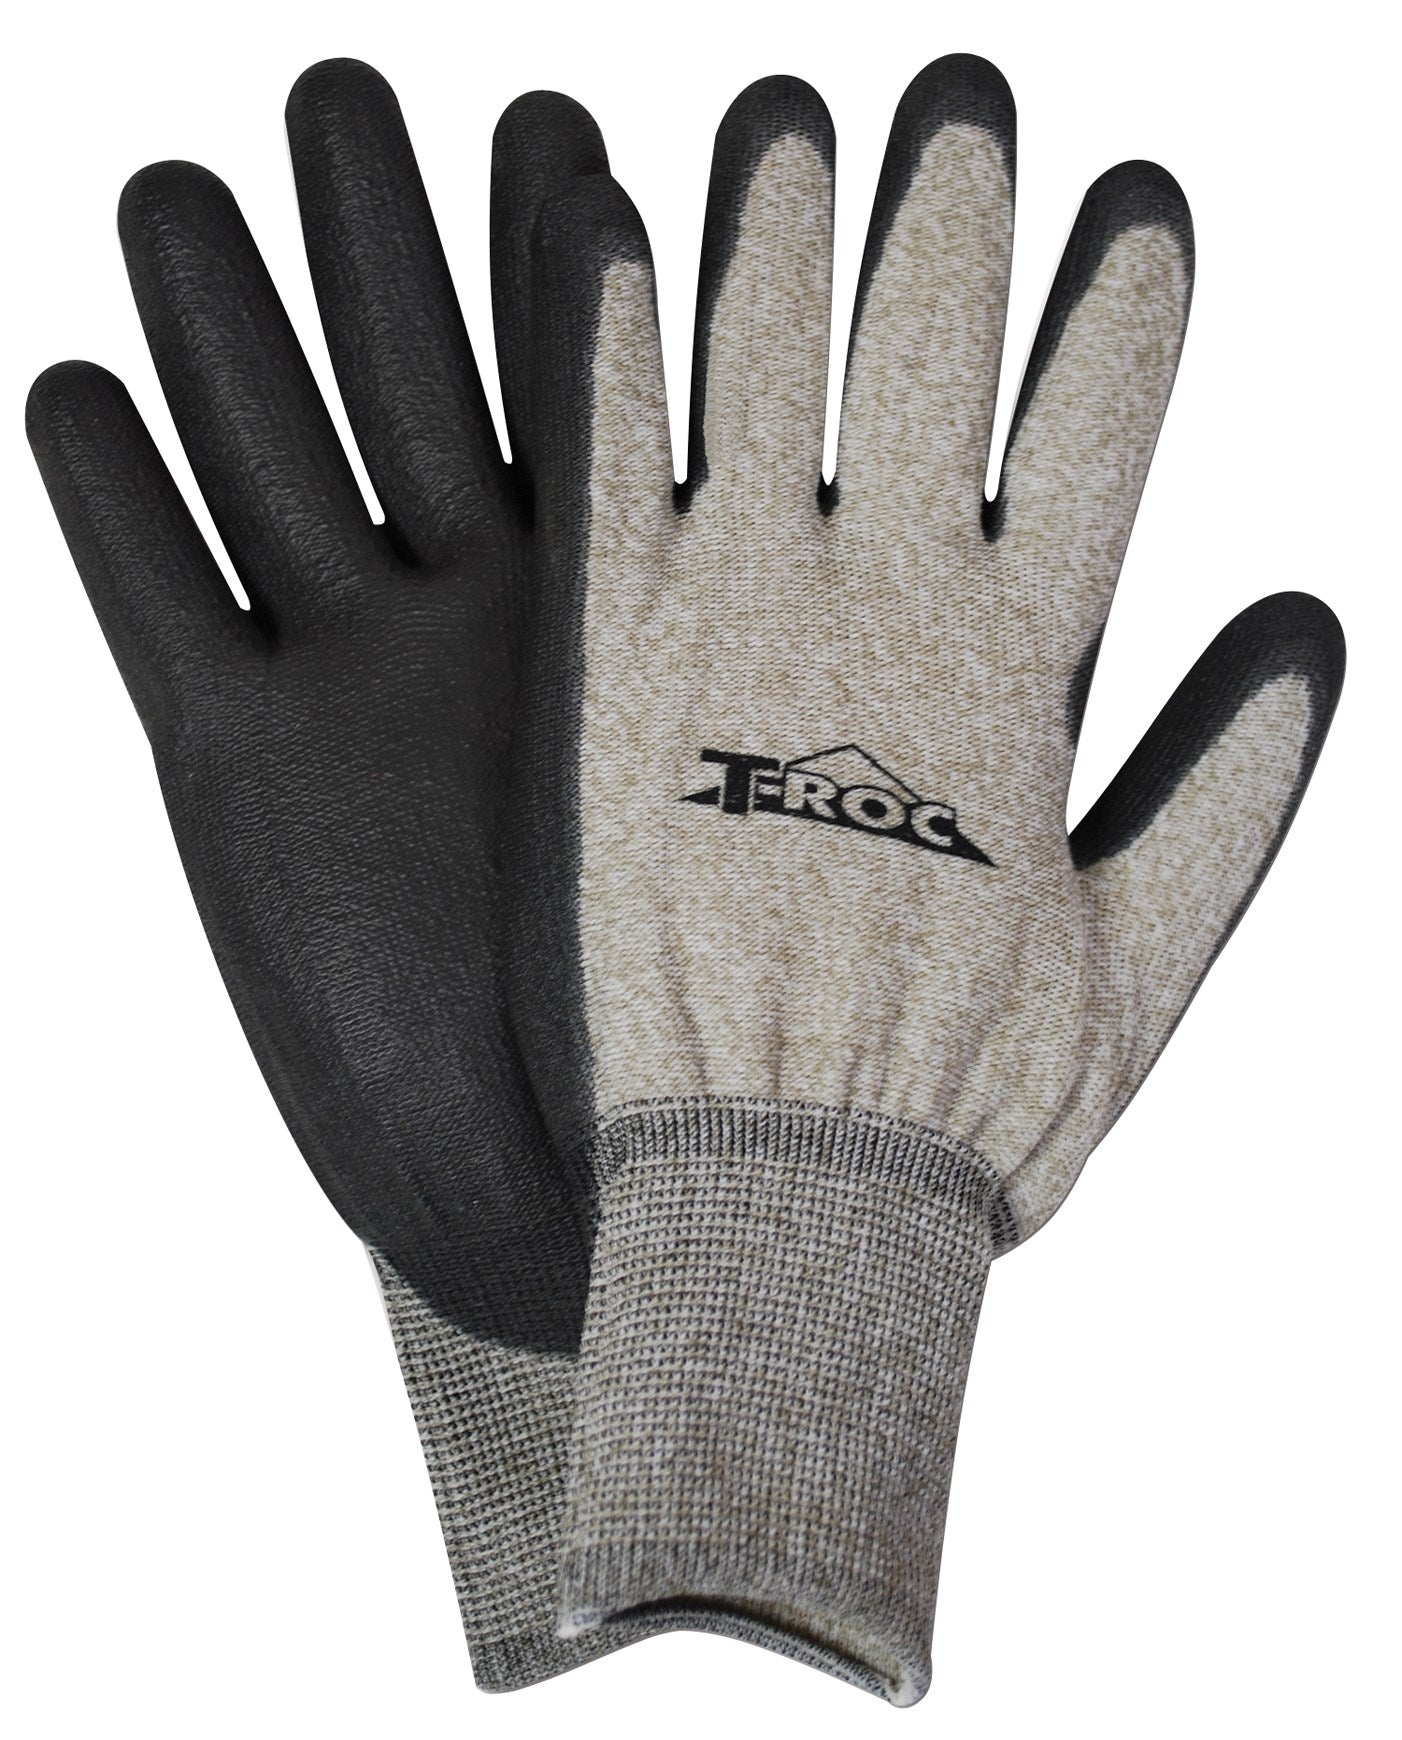 Gant magique, Magid Glove ROC5000TXL Gants à écran tactile ROC extra-larges